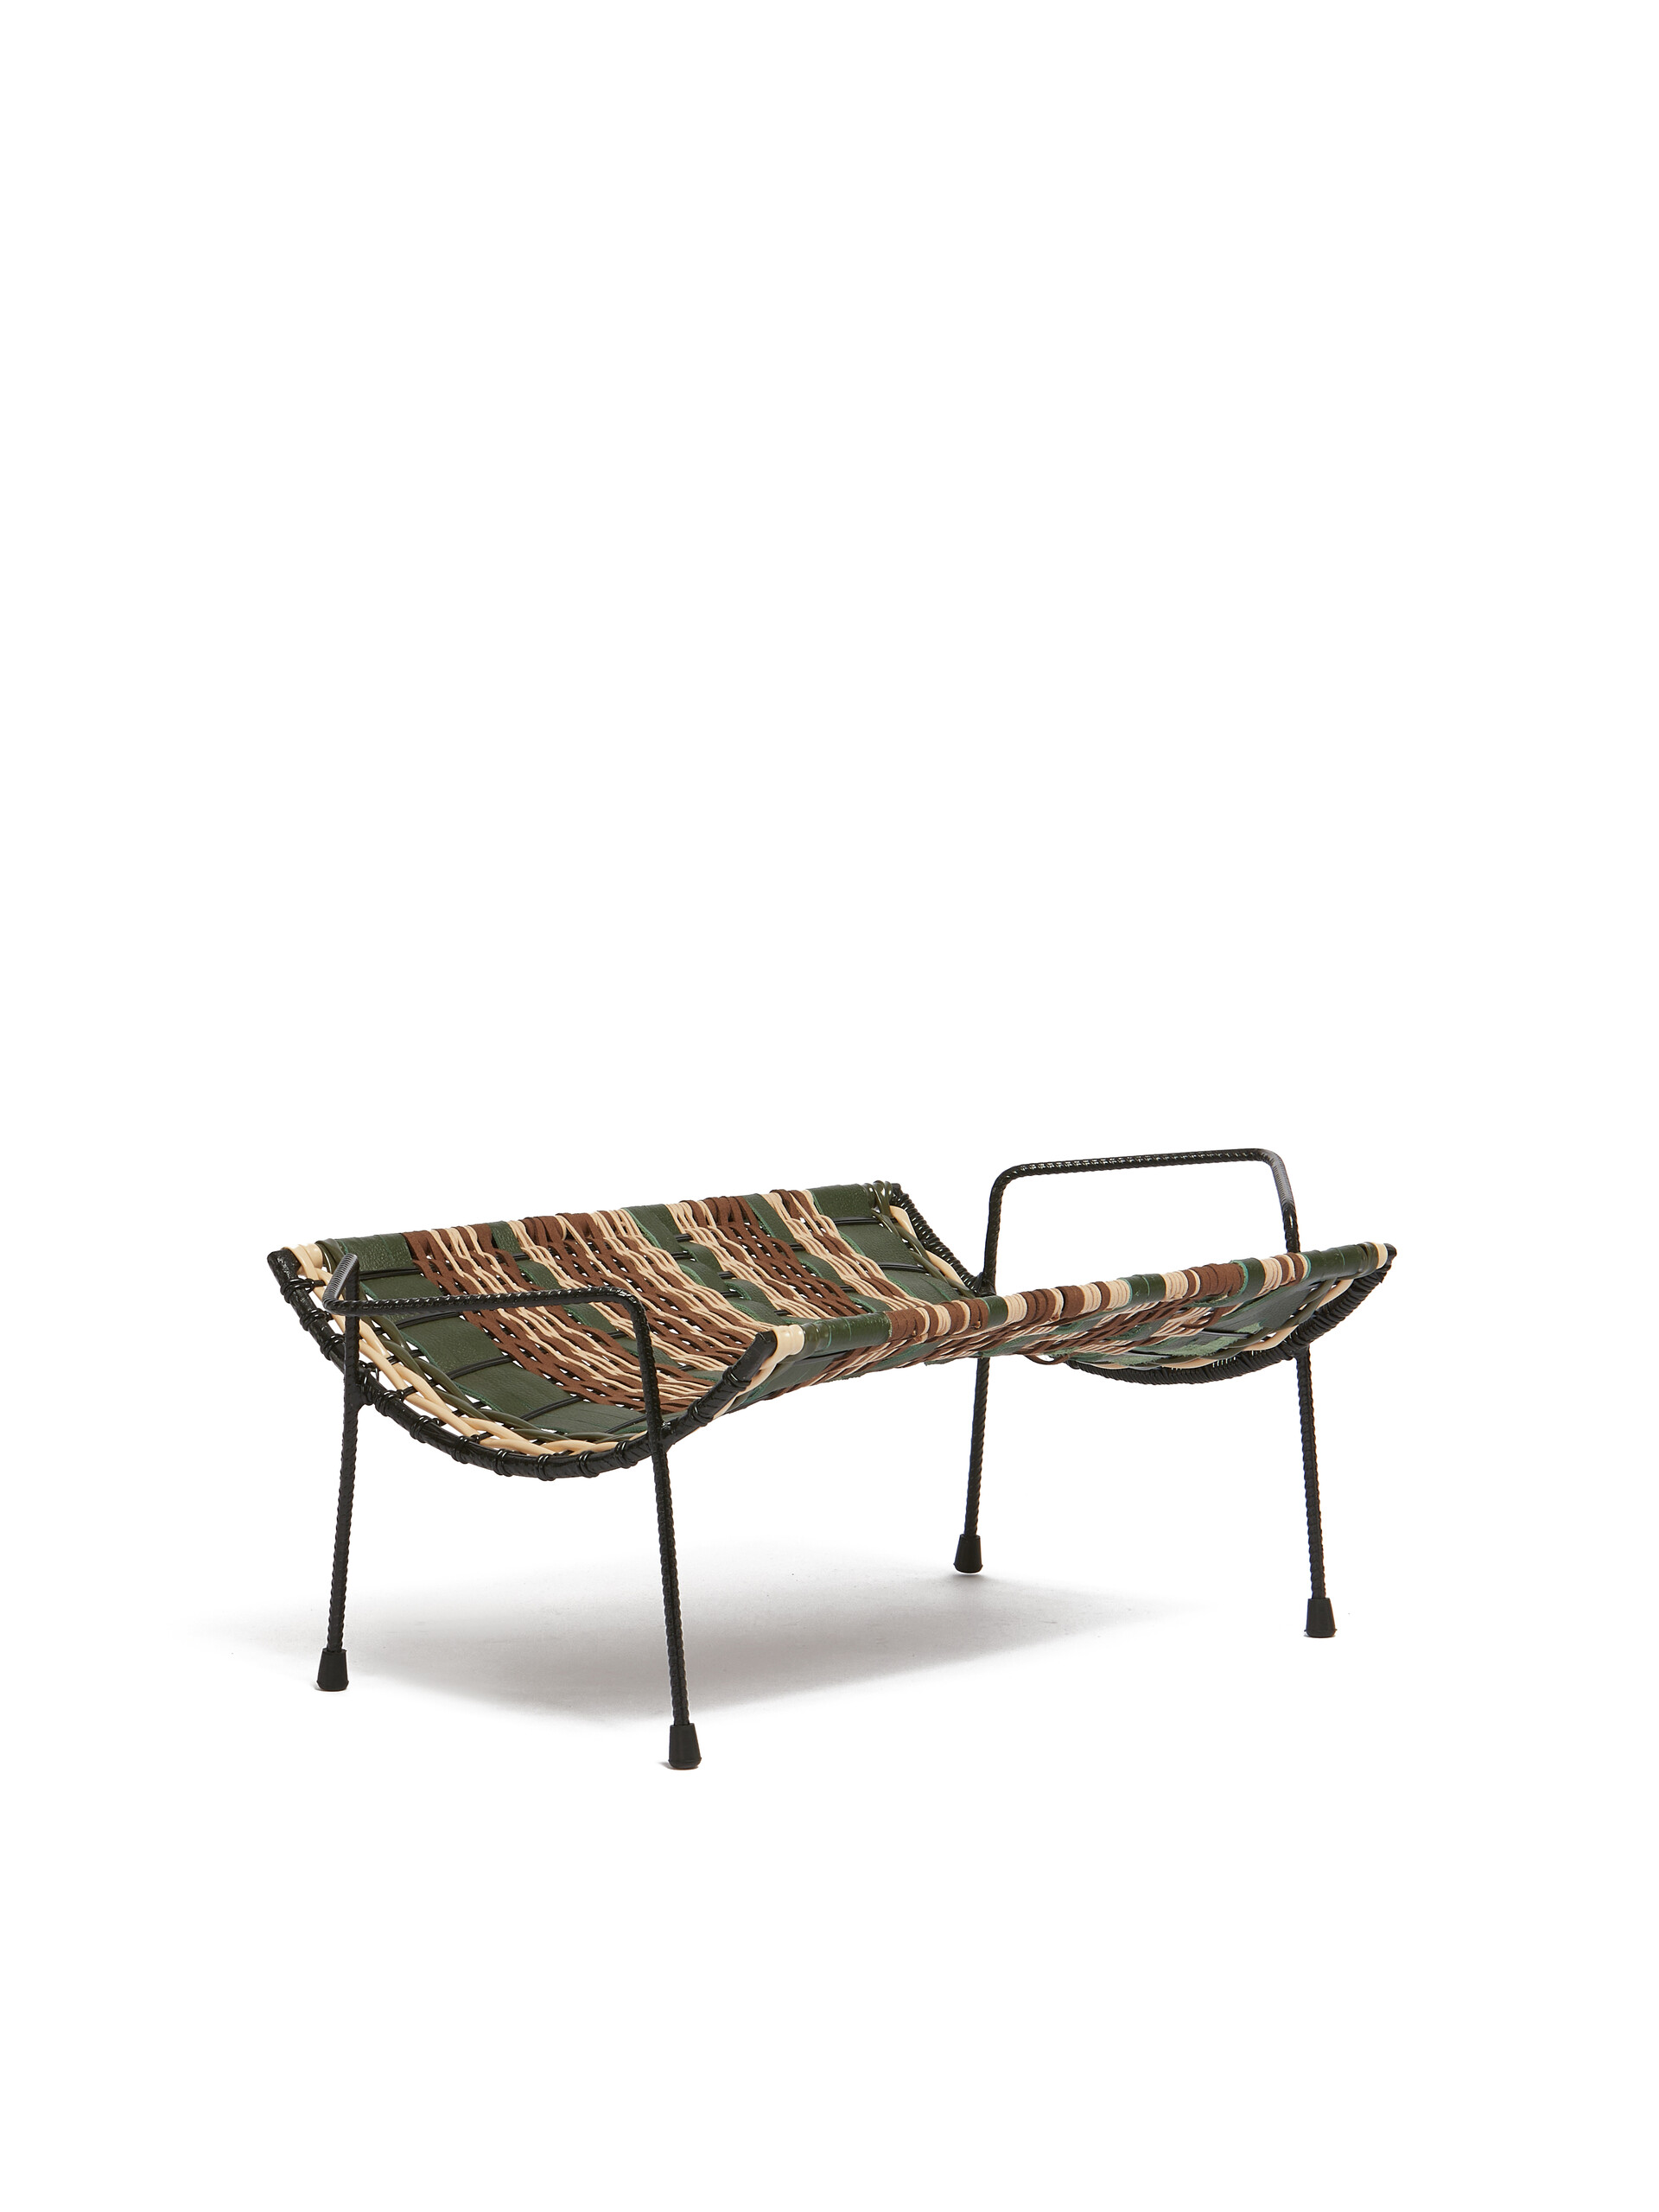 Deep green Marni Market woven filing tray - Furniture - Image 2